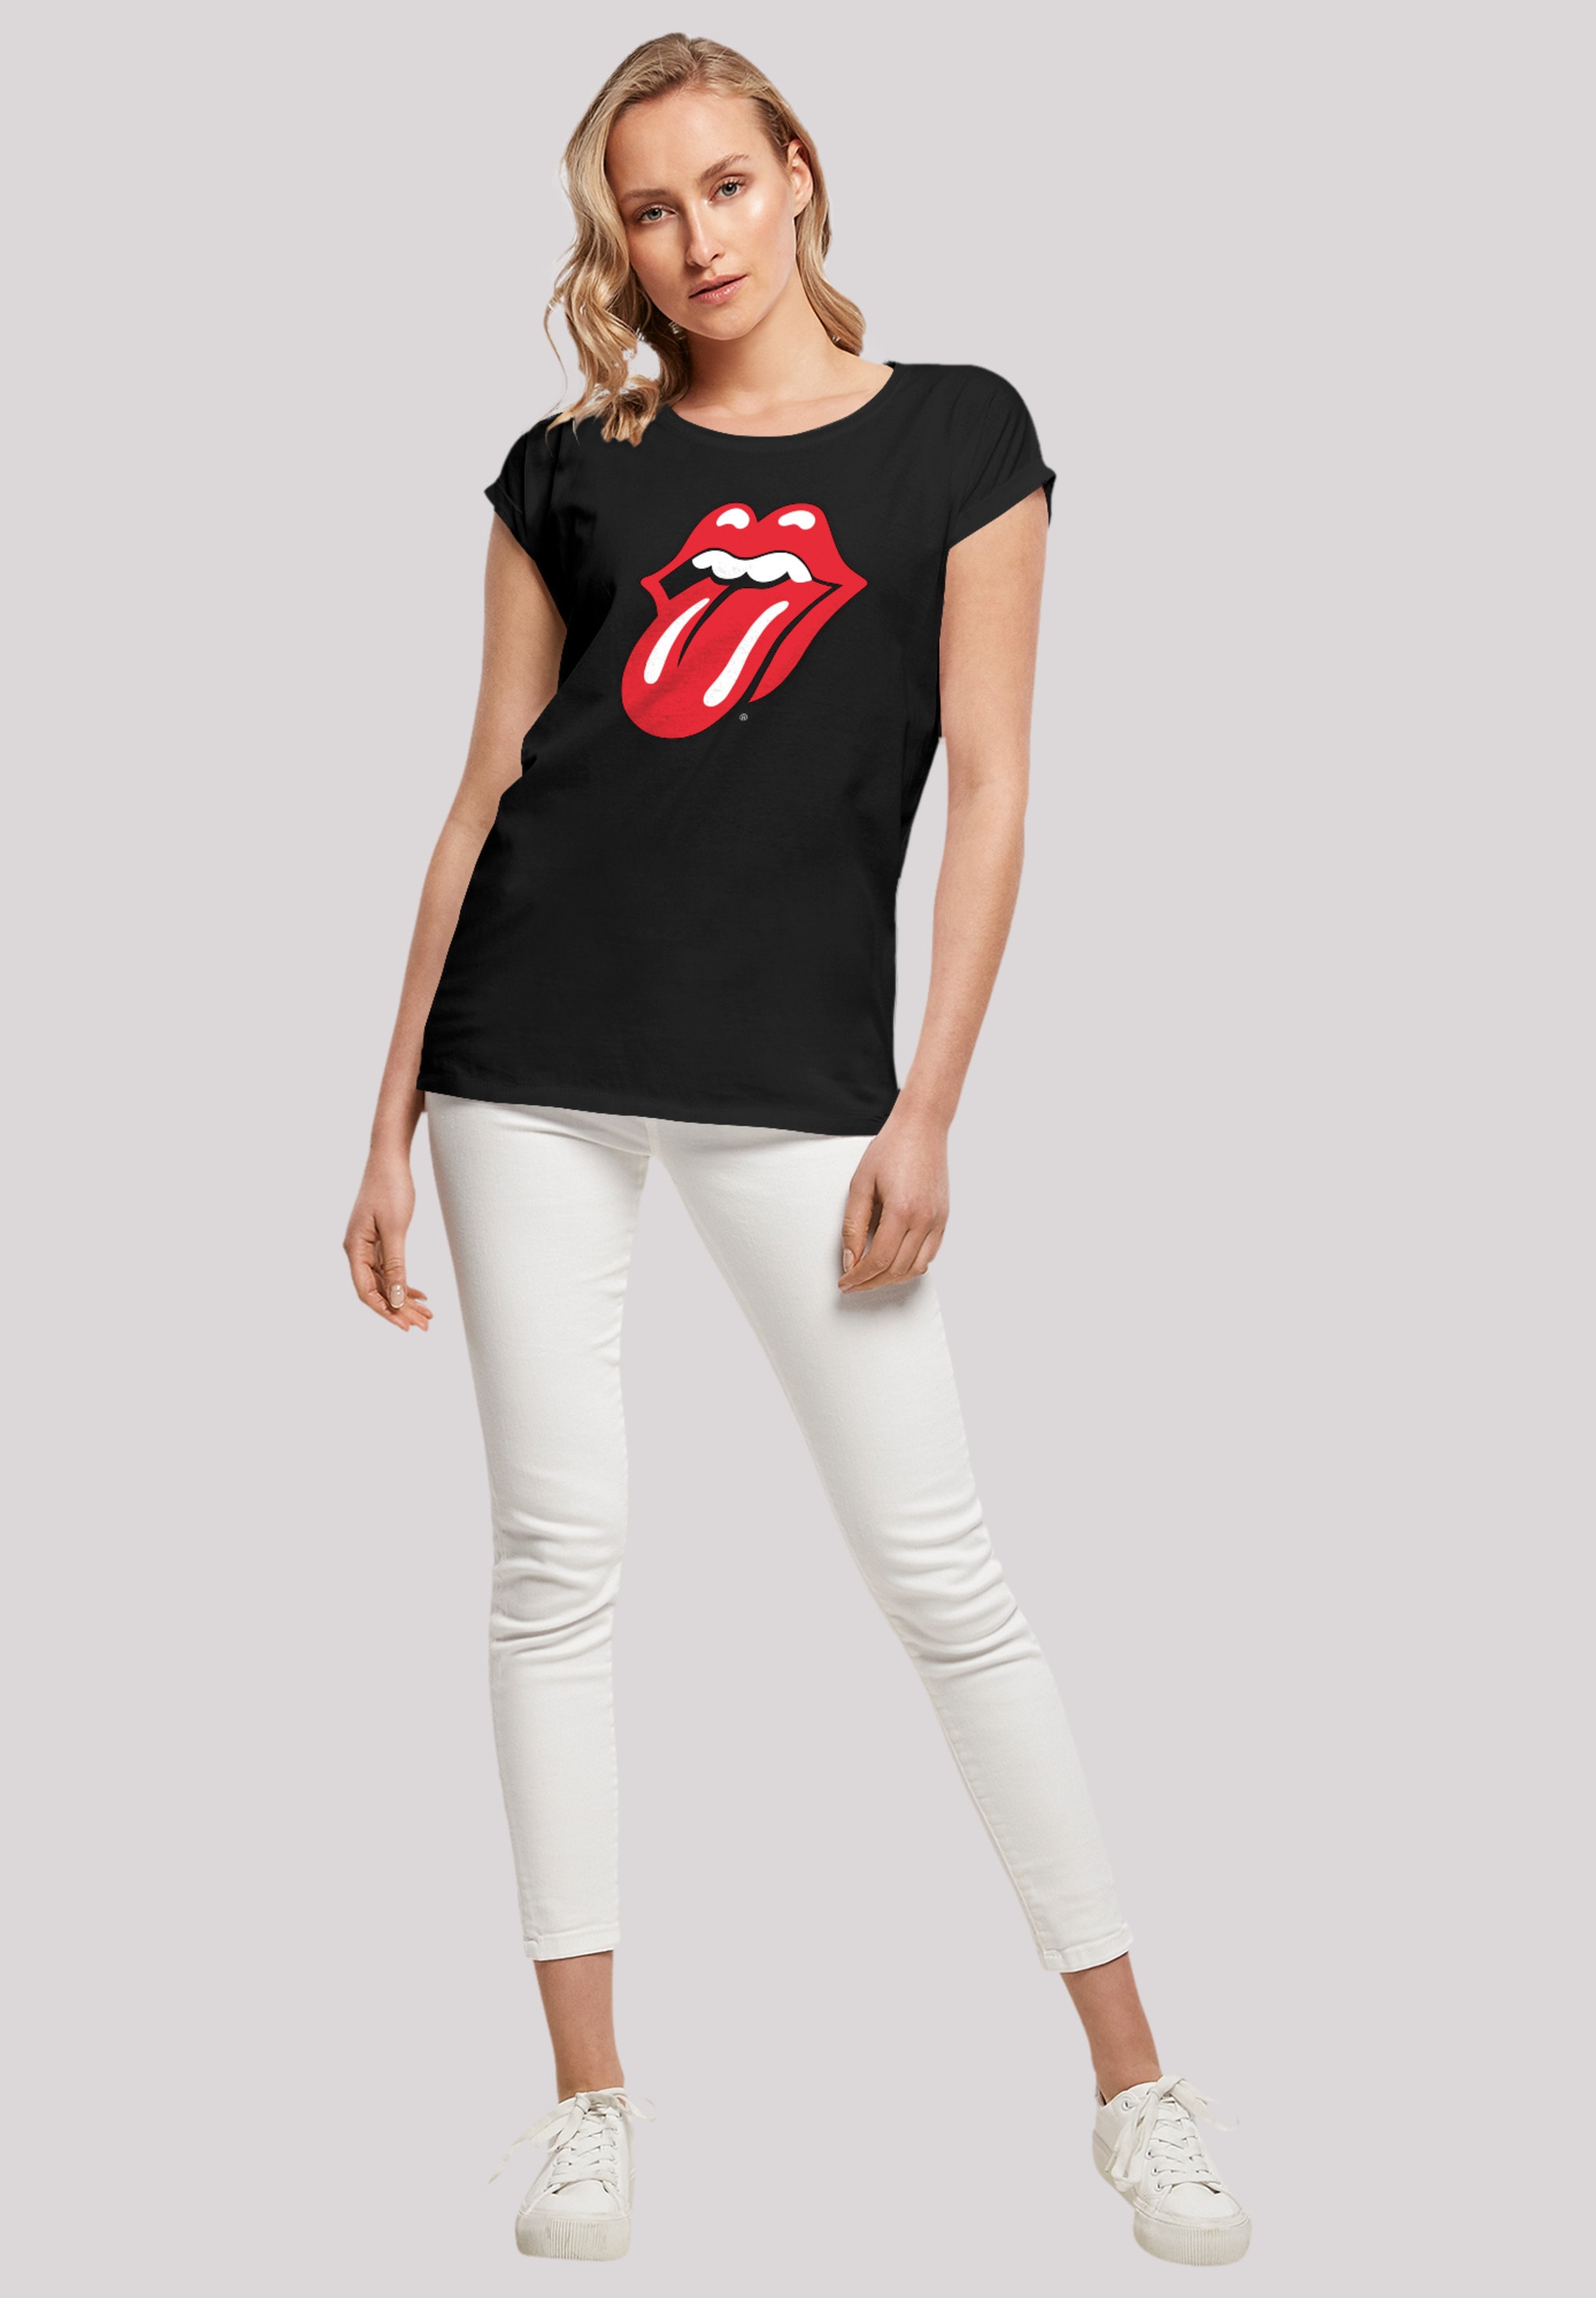 Stones walking »The F4NT4STIC Zunge Print Rolling kaufen Rot«, T-Shirt | I\'m